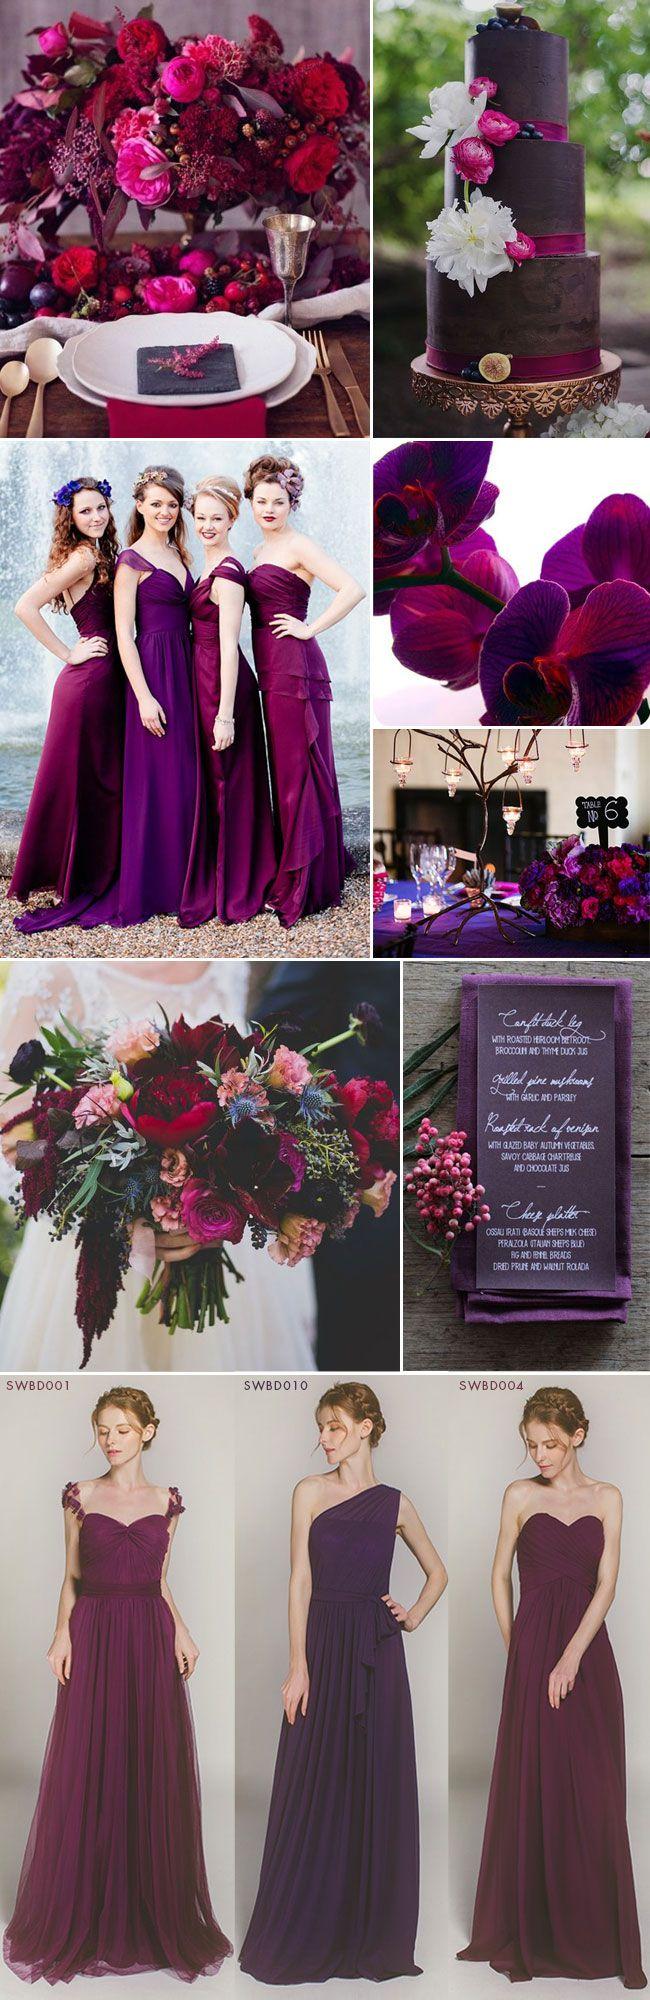 Wedding - Fabulous Fall Wedding Inspiration: Moody Jewel-toned Wedding Ideas